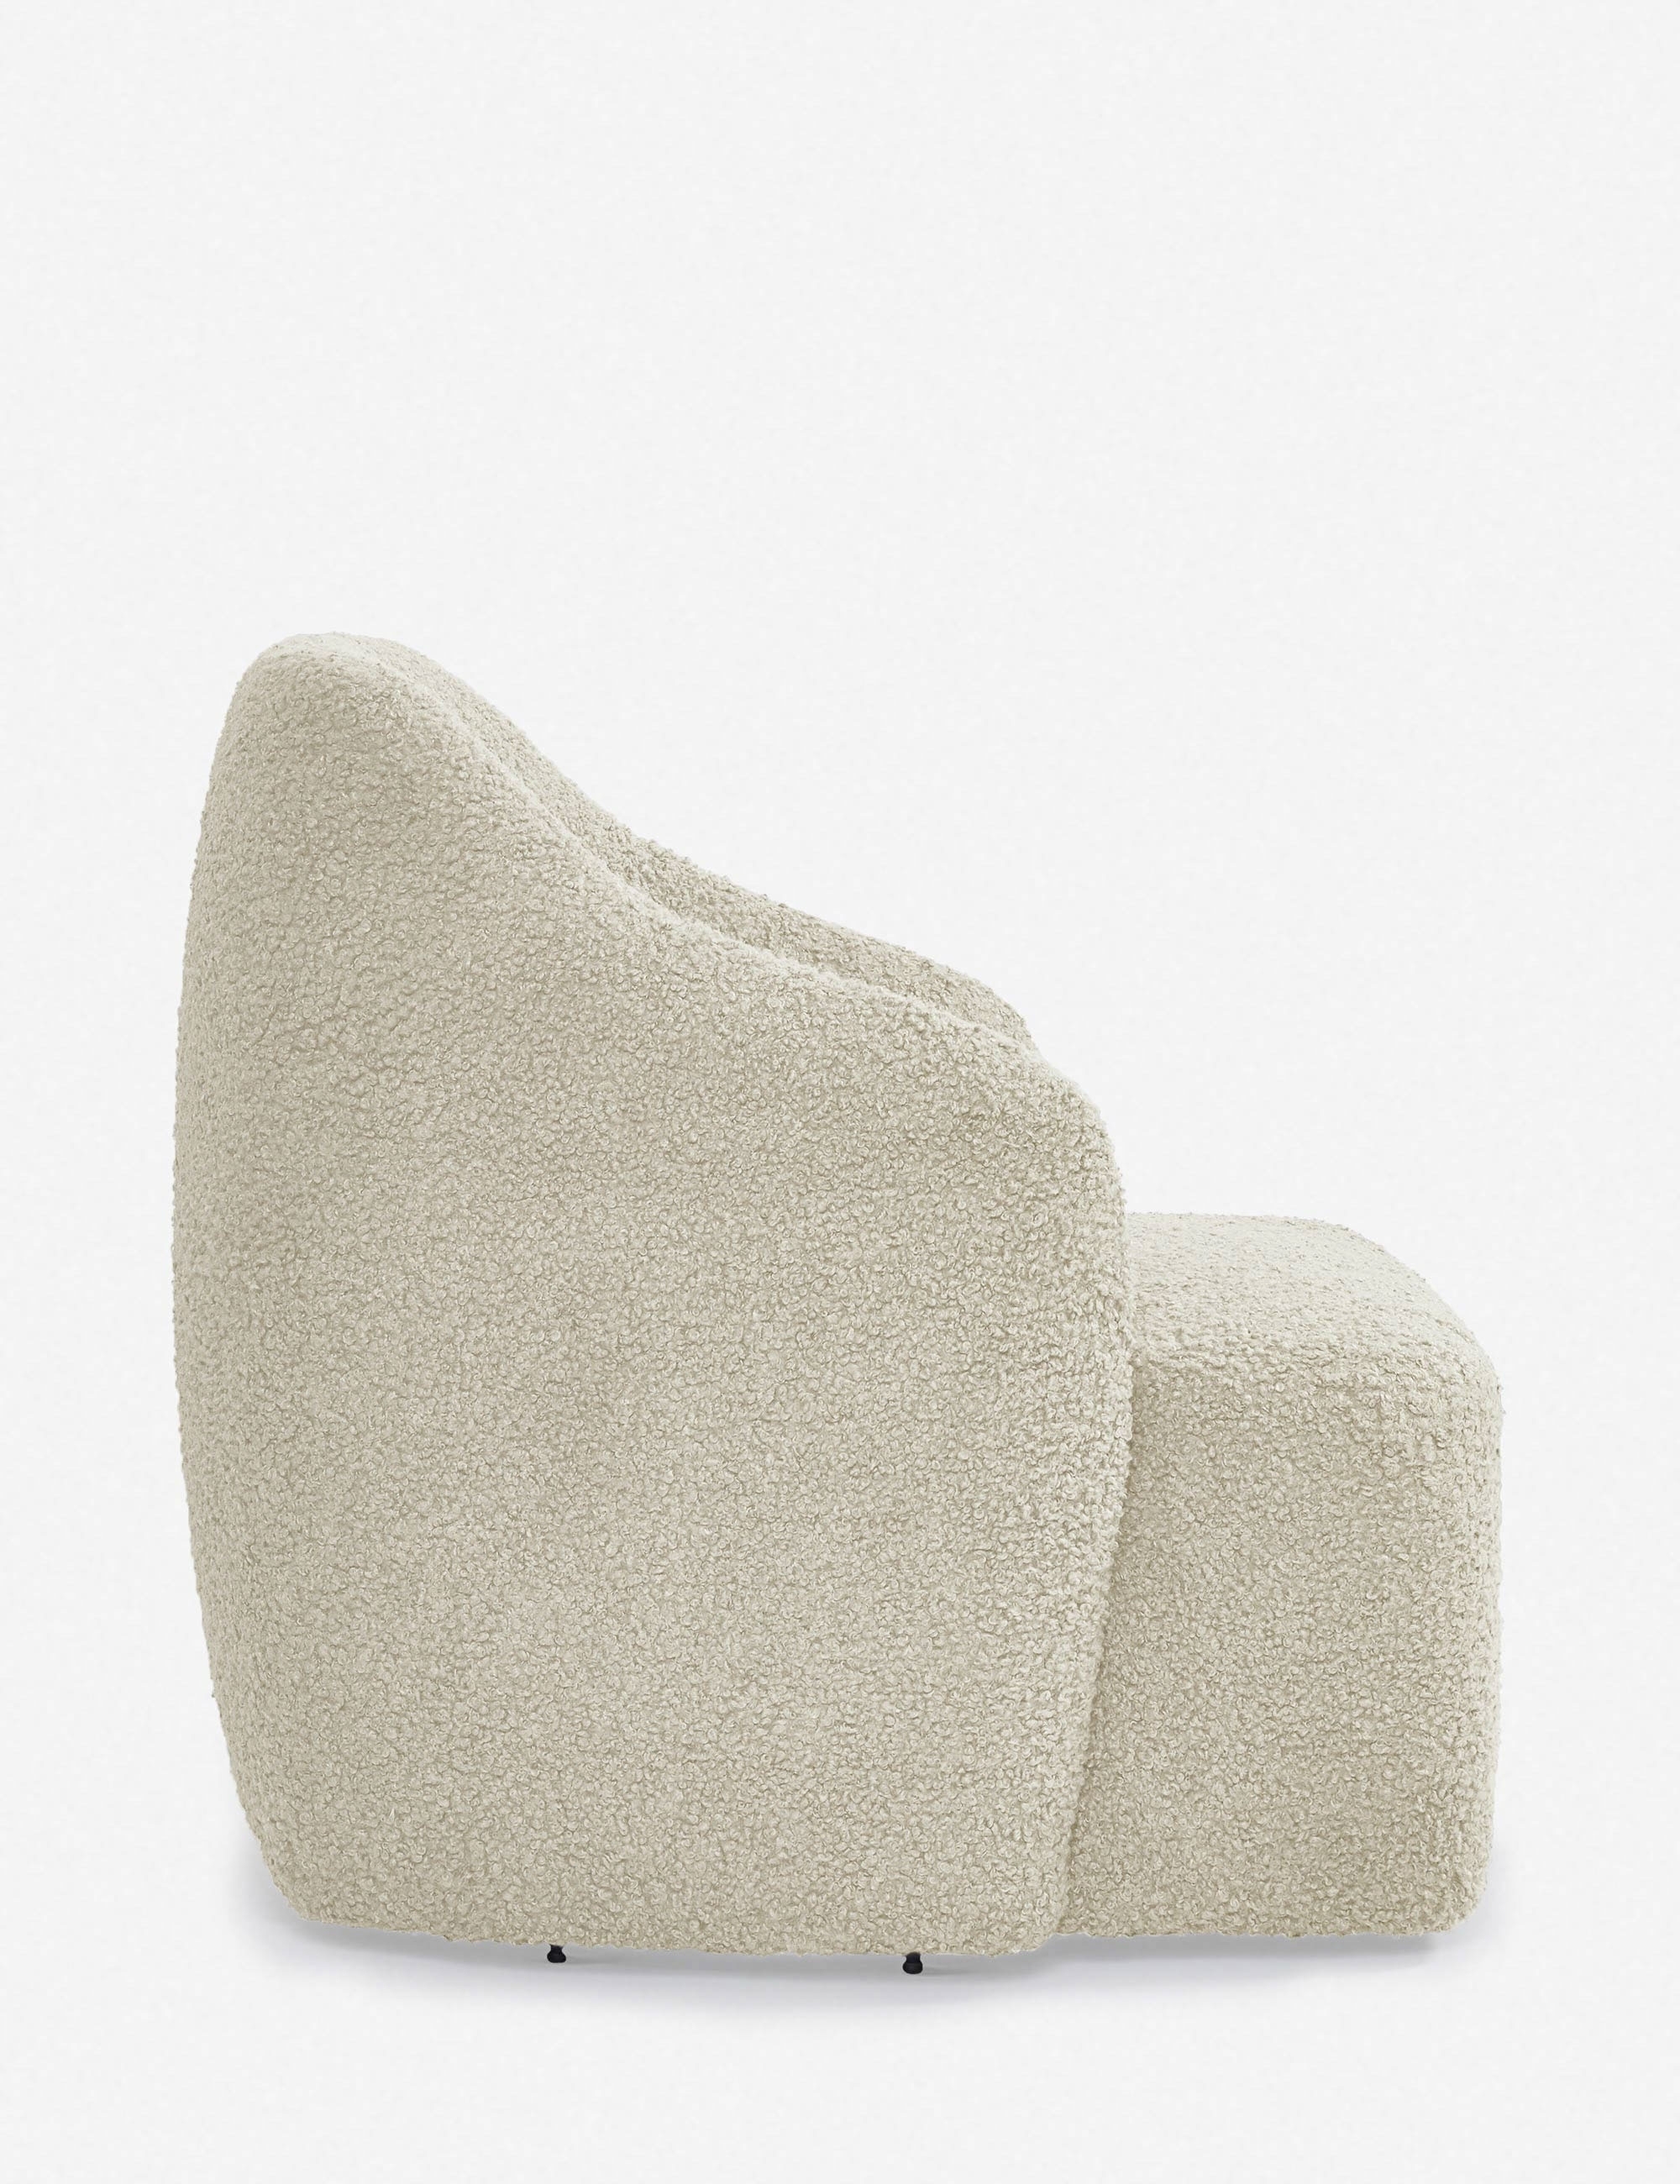 Tobi Swivel Chair - Image 7